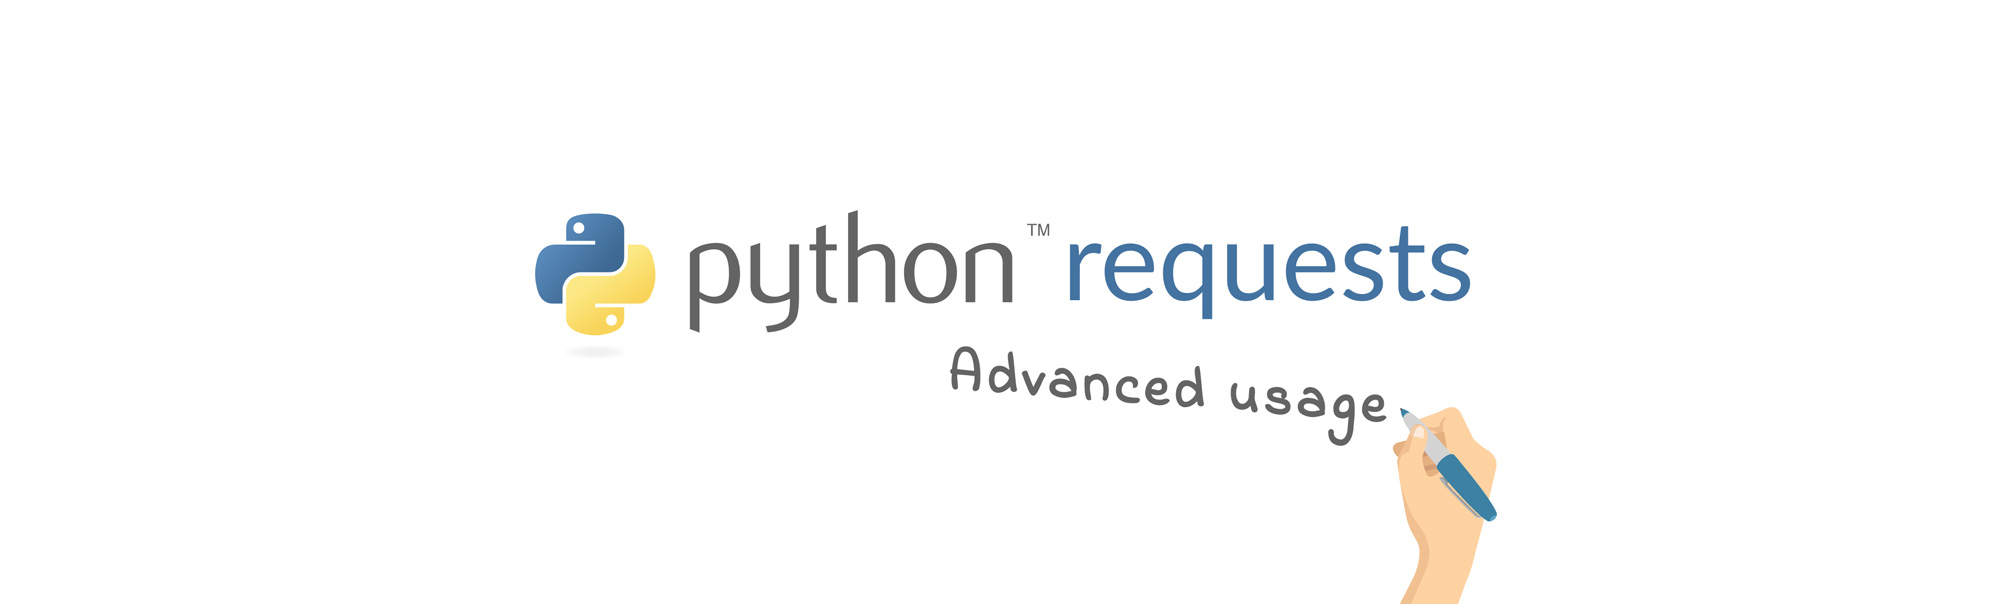 python-requests